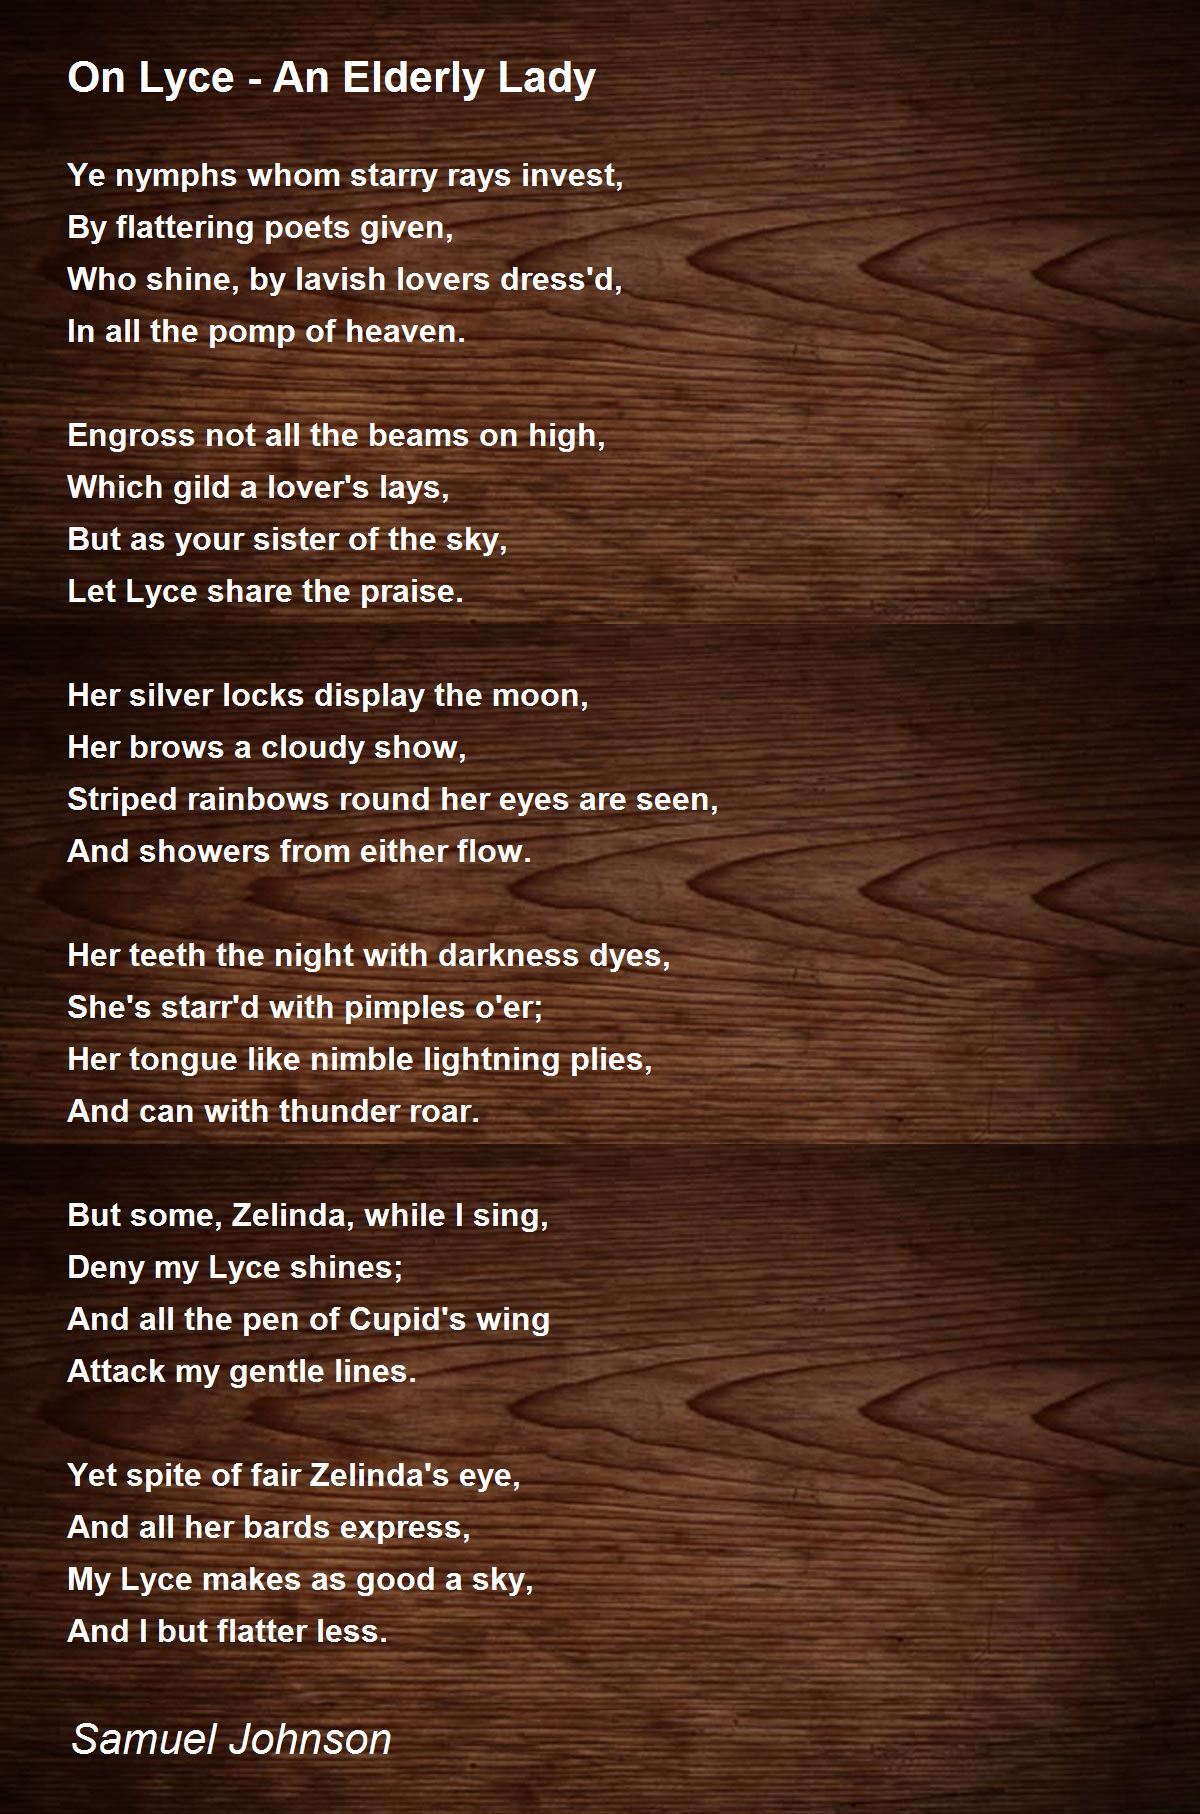 On Lyce - An Elderly Lady Poem by Samuel Johnson - Poem Hunter
